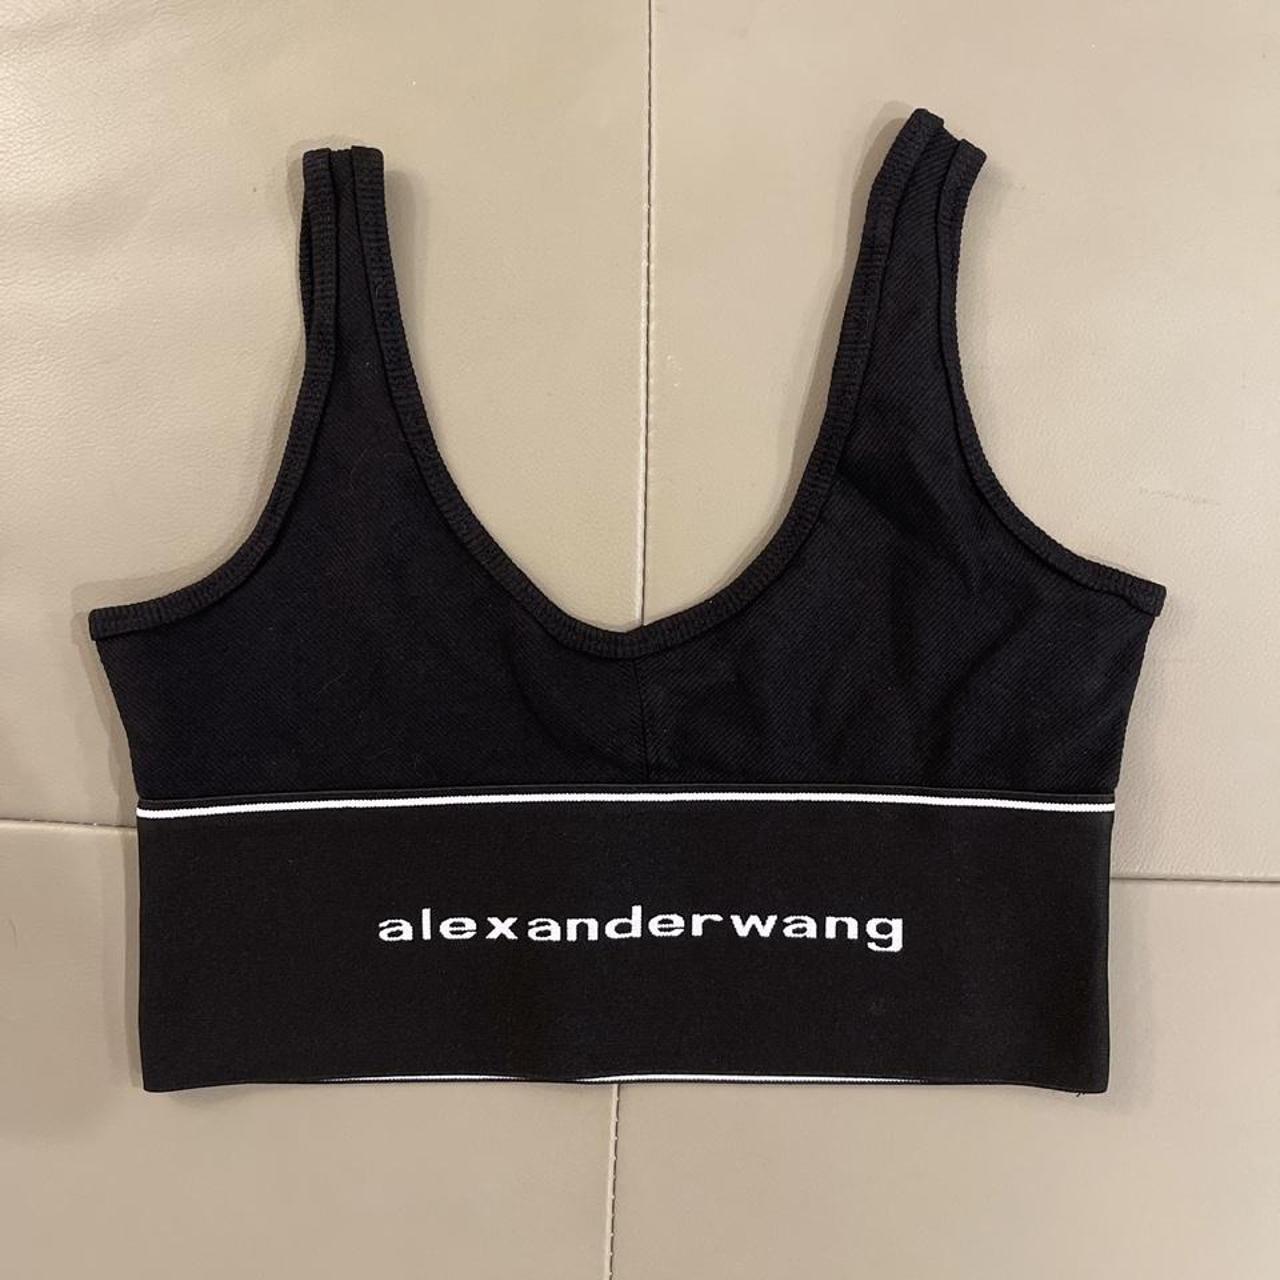 Buy Alexander Wang Bras - Women